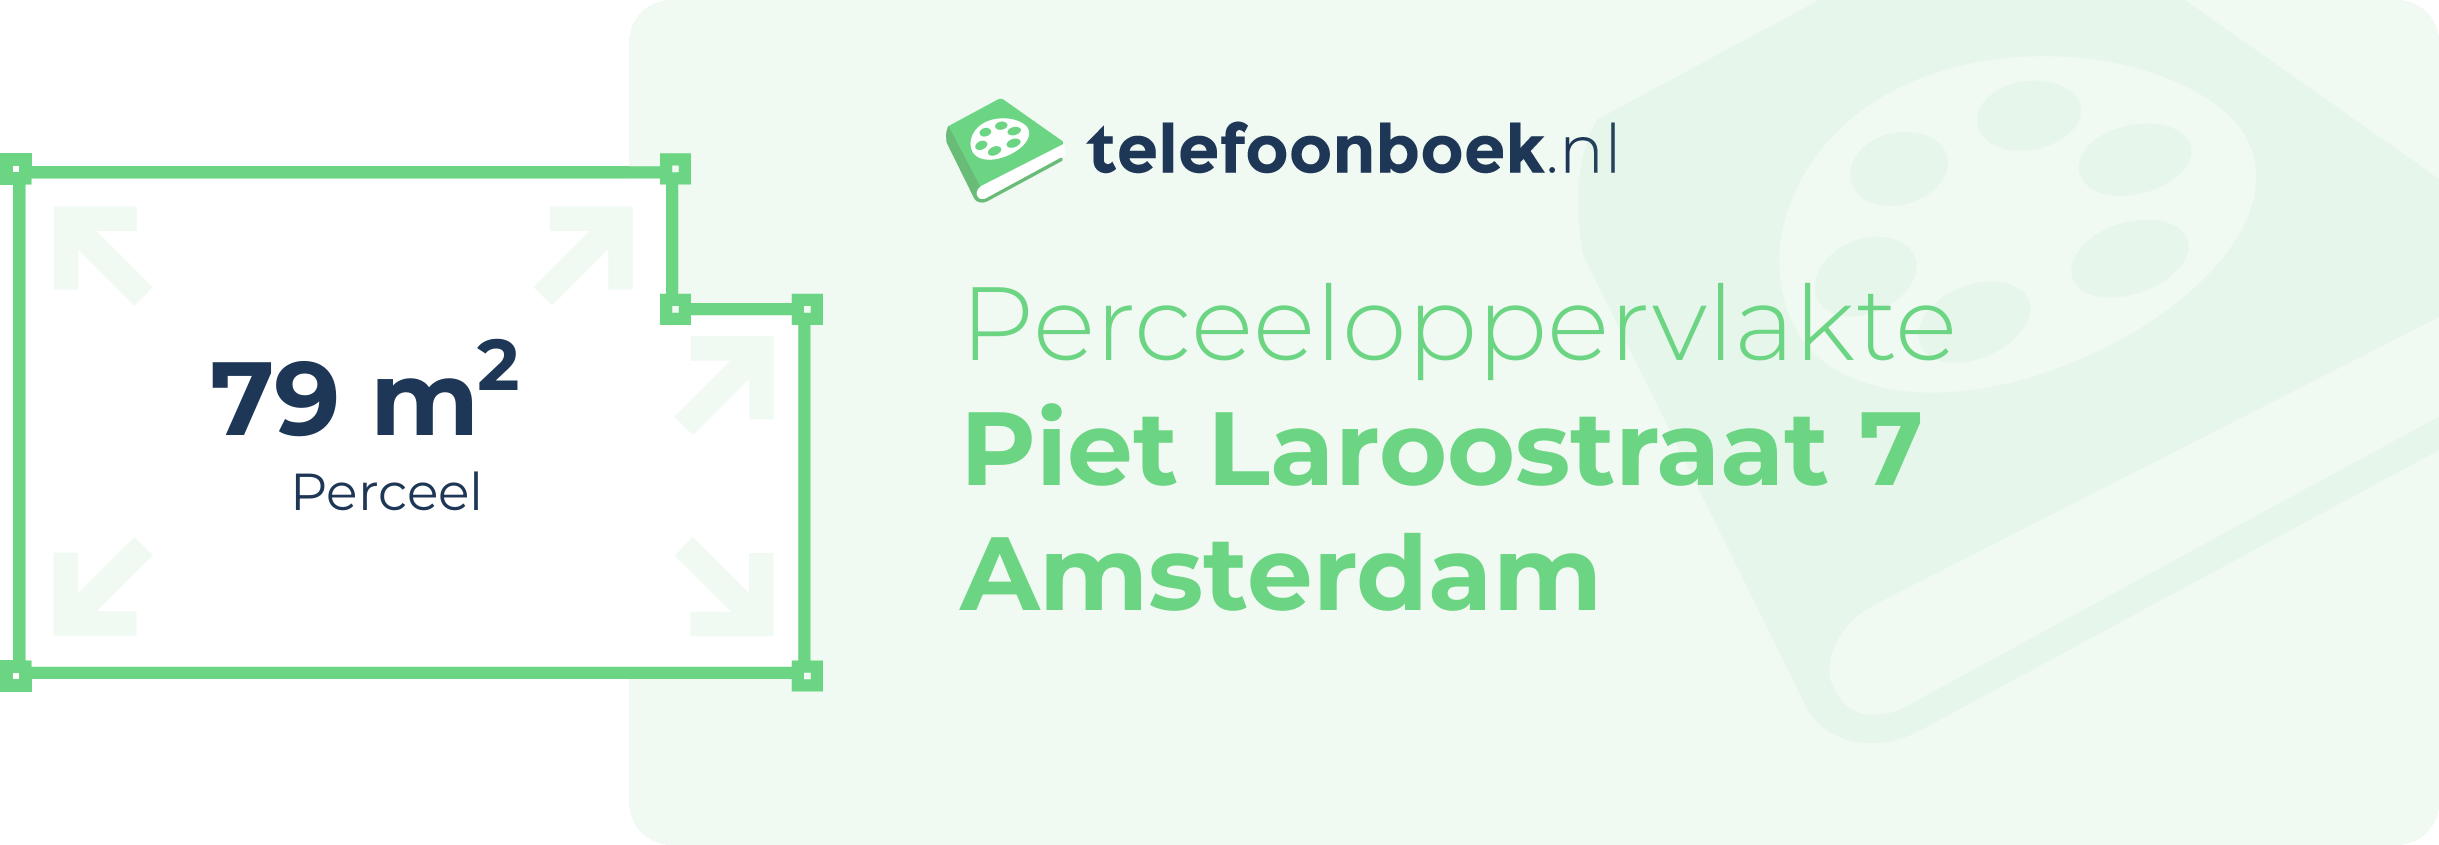 Perceeloppervlakte Piet Laroostraat 7 Amsterdam